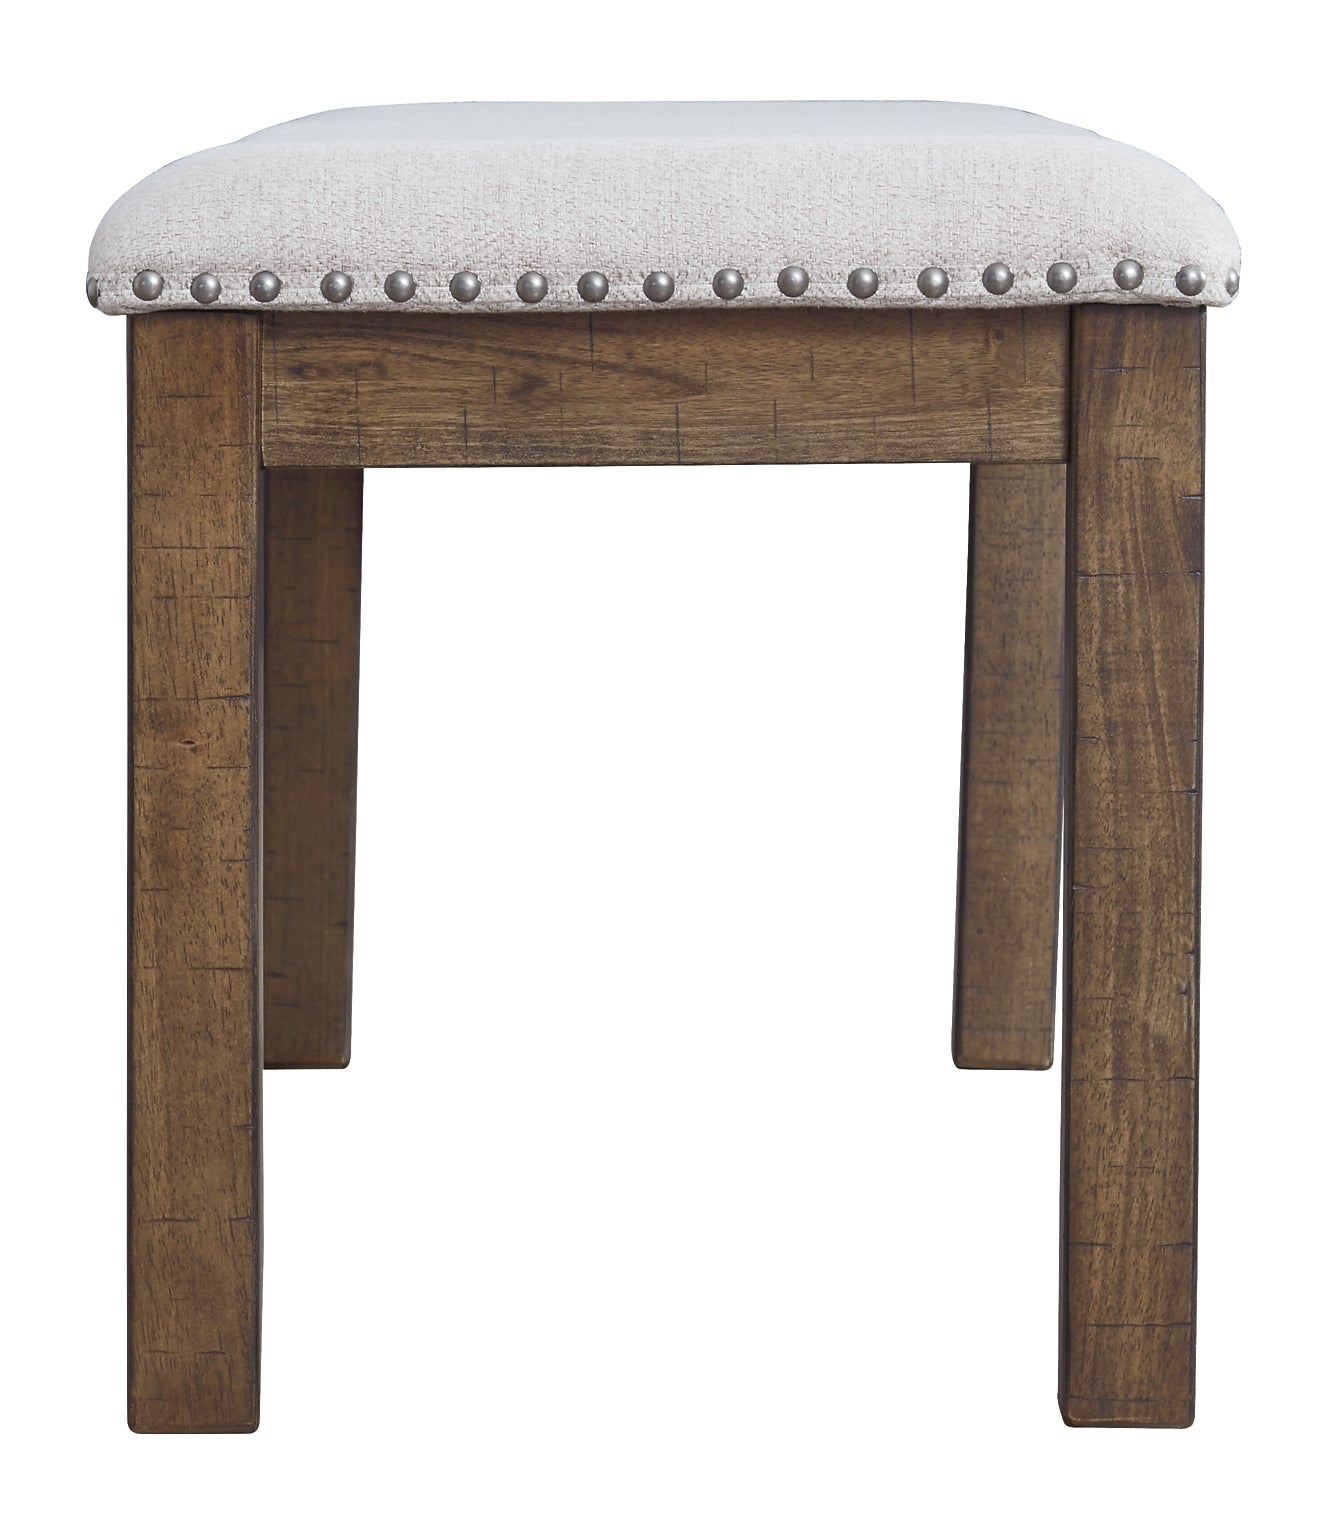 Moriville Upholstered Bench at Cloud 9 Mattress & Furniture furniture, home furnishing, home decor